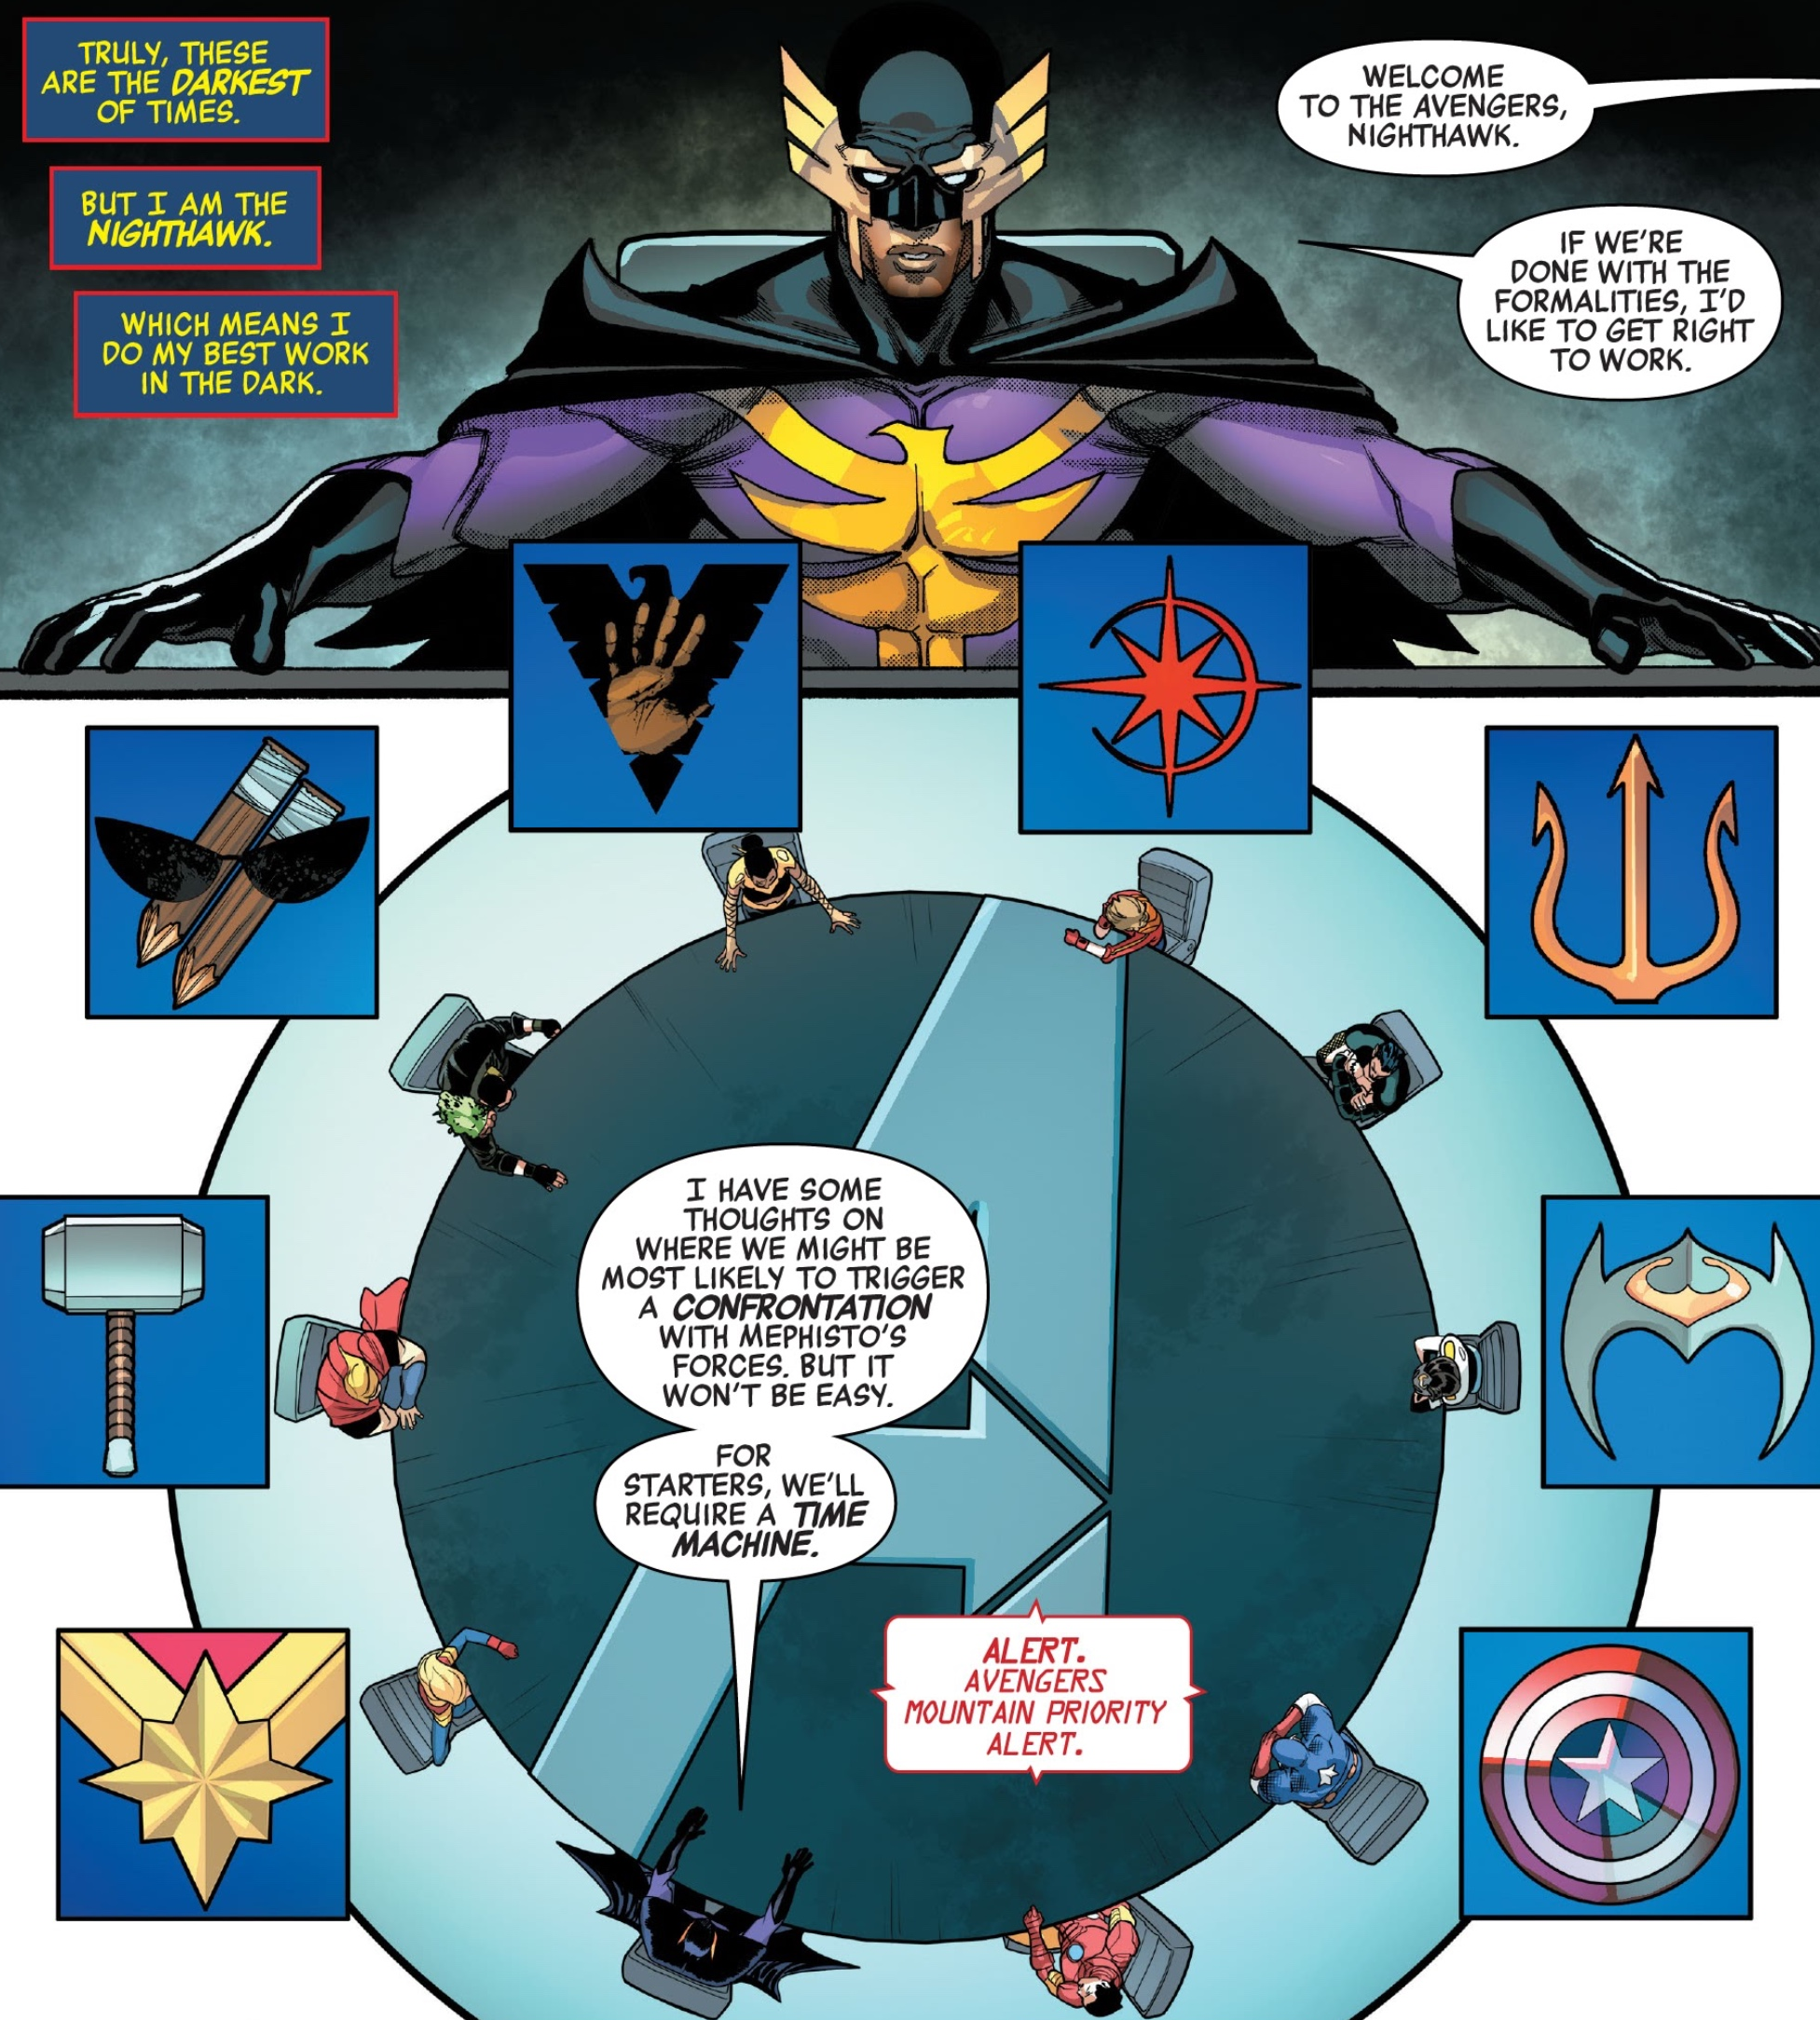 Avengers meeting all business nighthawk comics